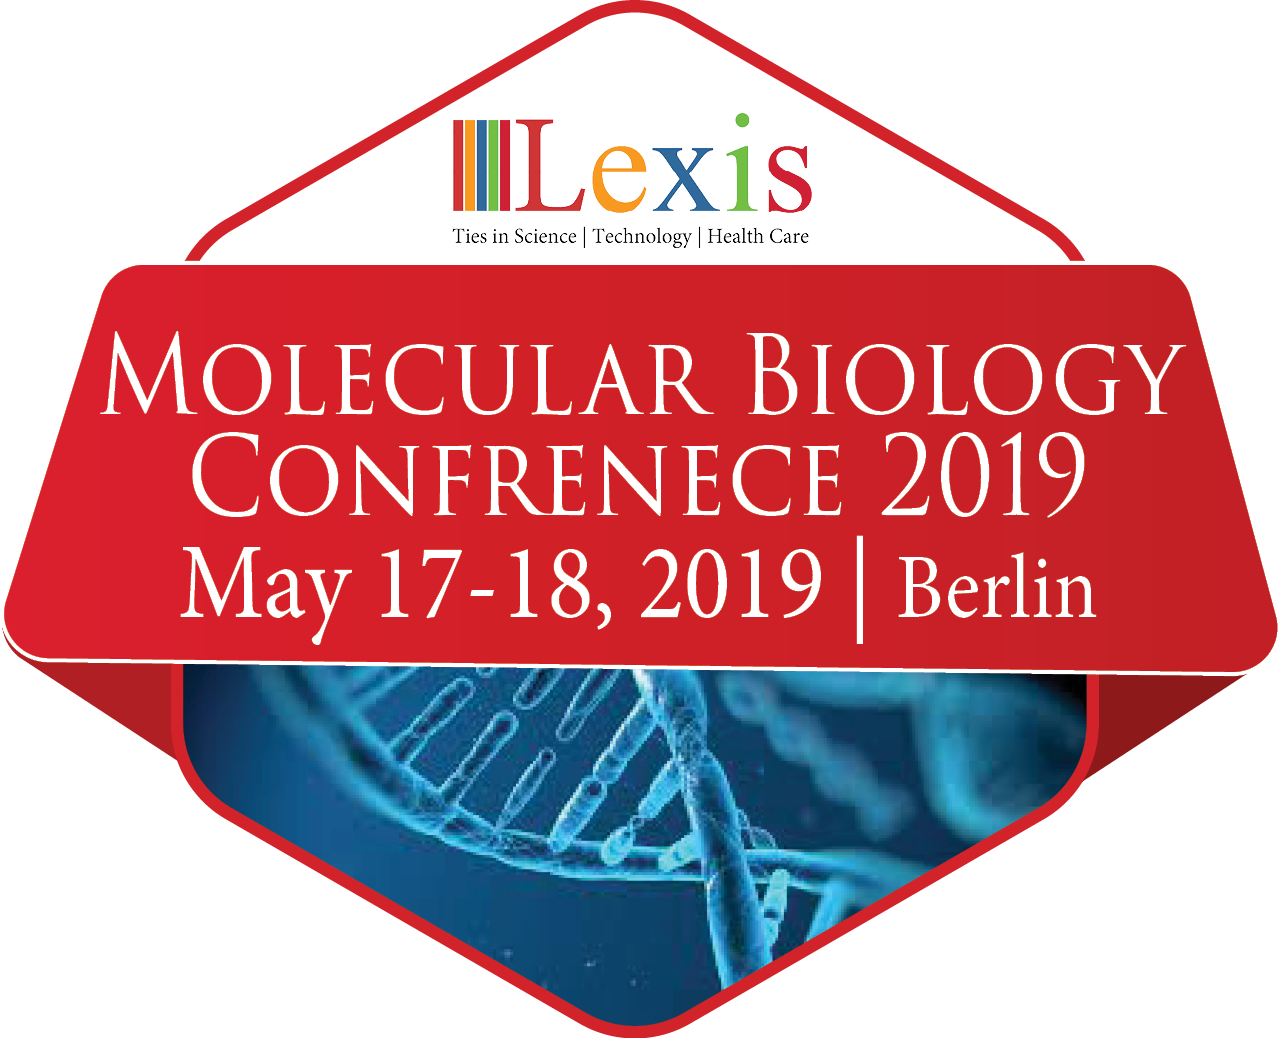 Molecular Biology Conference 2019